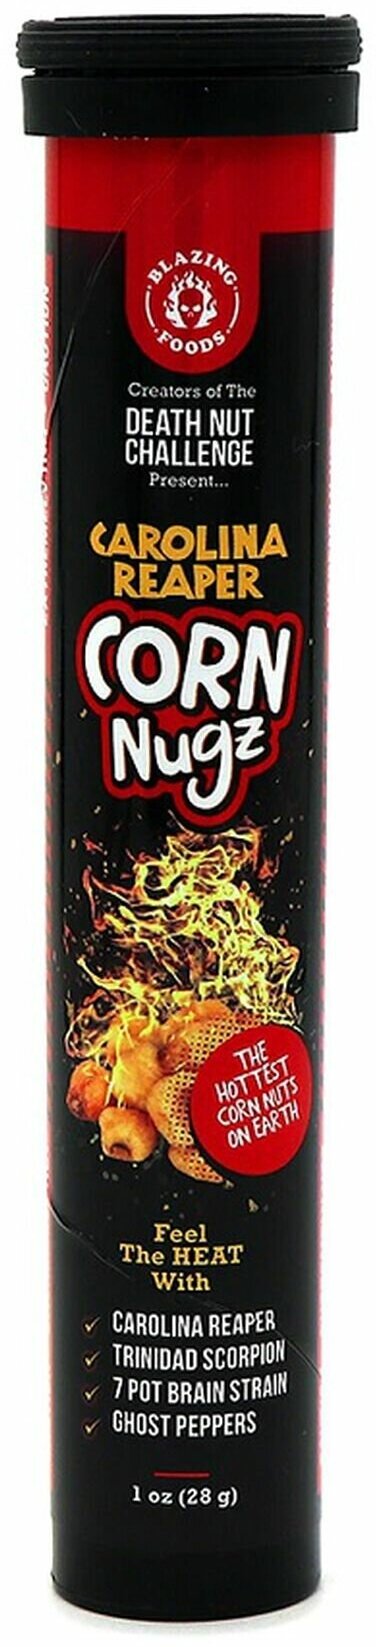 Острая кукуруза CORN Nugz. Death Nut Challenge. 13.000.000 ед. остроты по Сковиллу